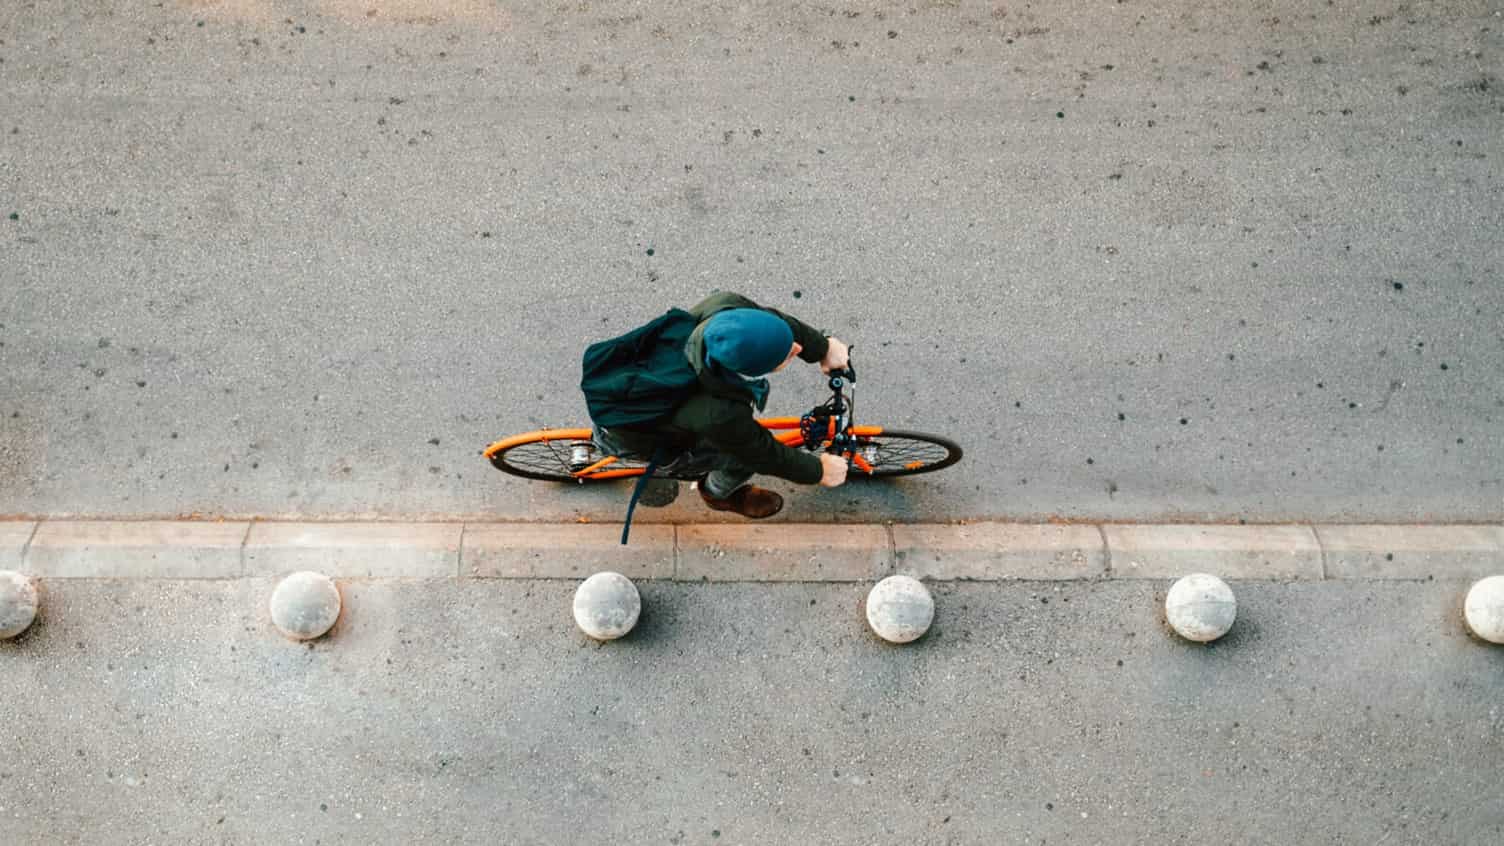 A bird-eye view of a person cycling on a concrete road, on an orange bike 